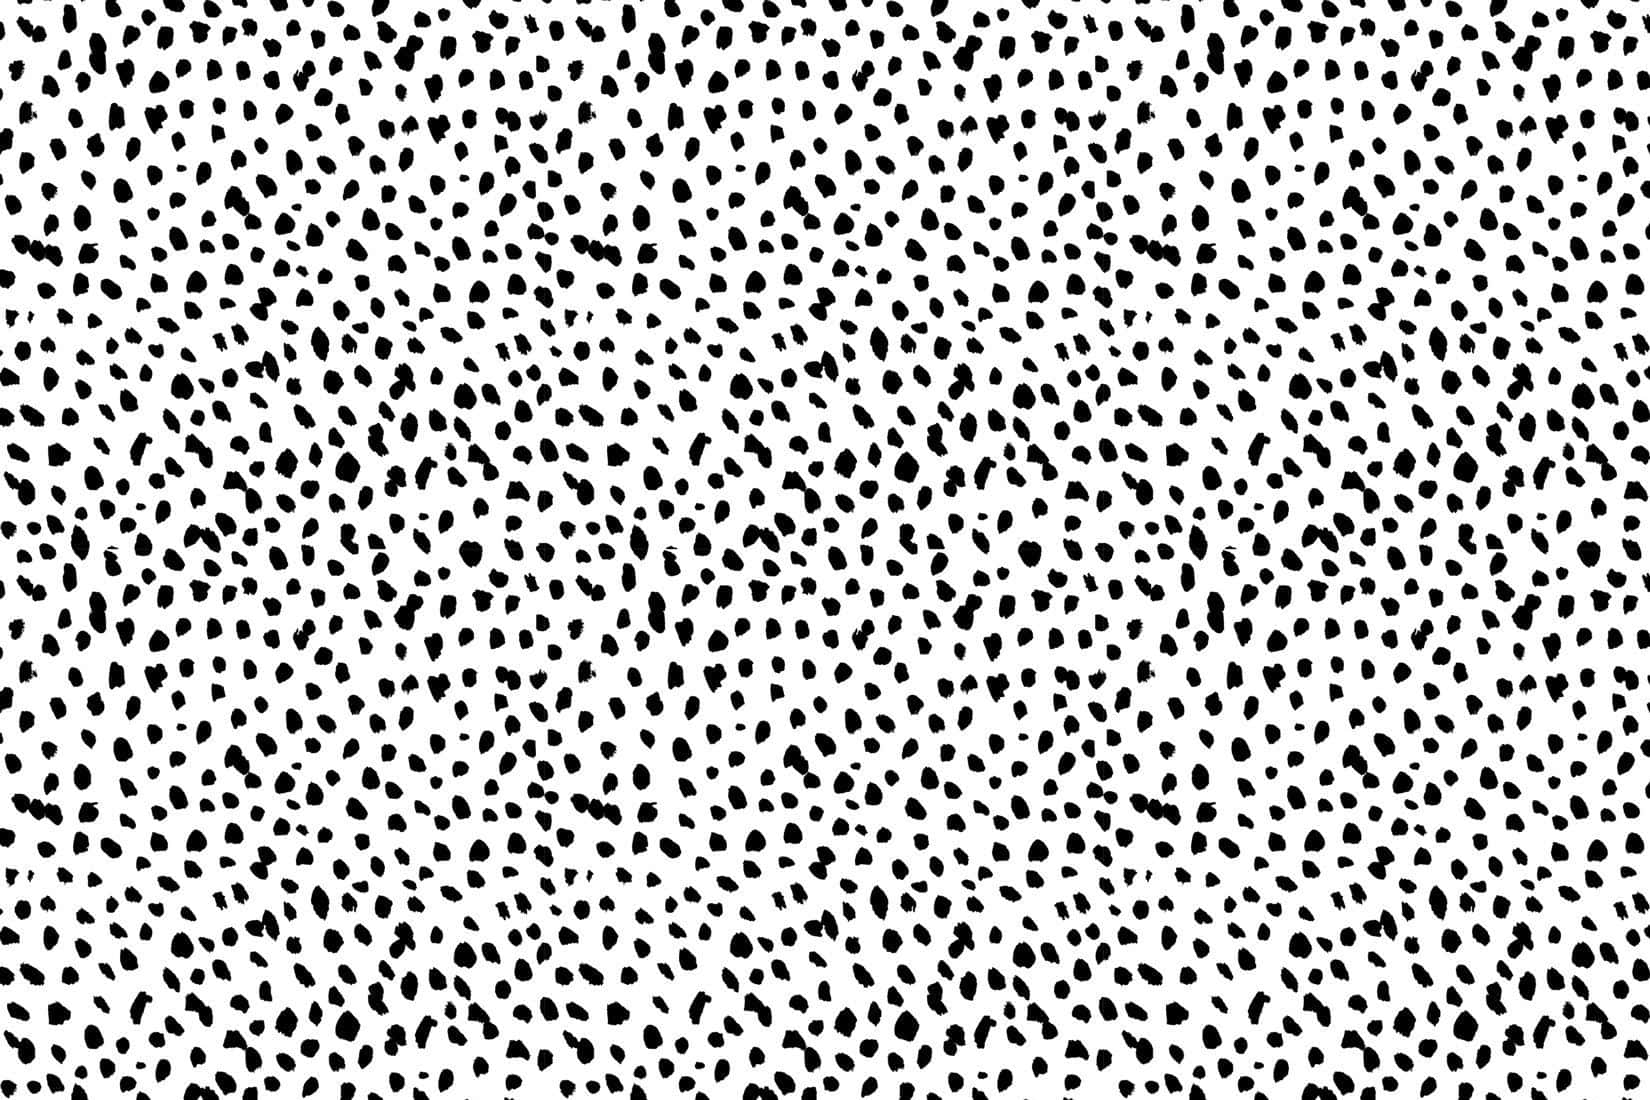 Dalmatian Print Mini Polka Dotter Wallpaper